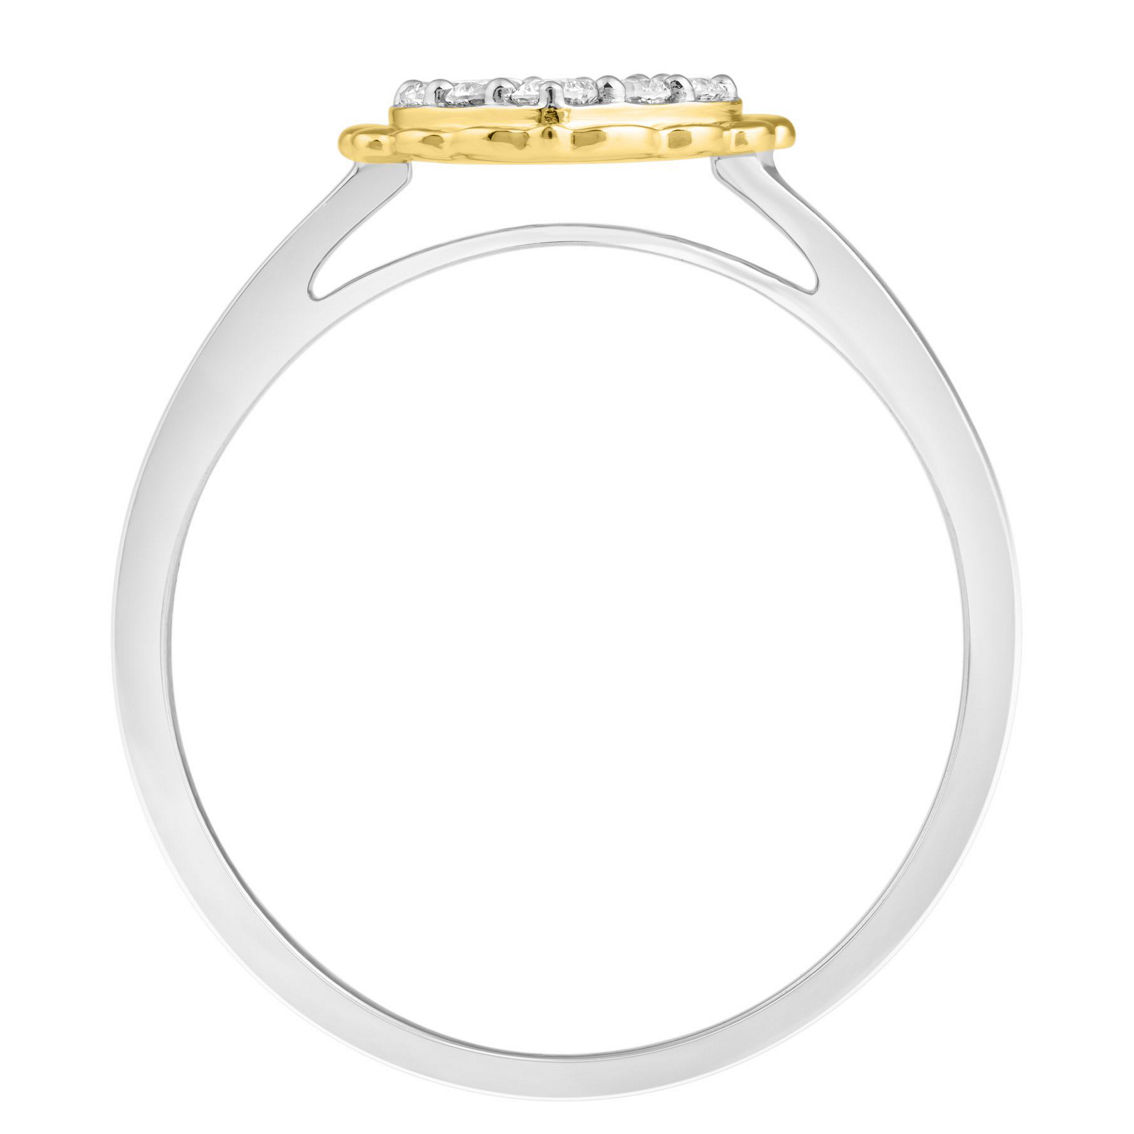 APMG 14K White & Yellow Gold 1/4 CTW Diamond Heart Cluster Ring - Image 3 of 4